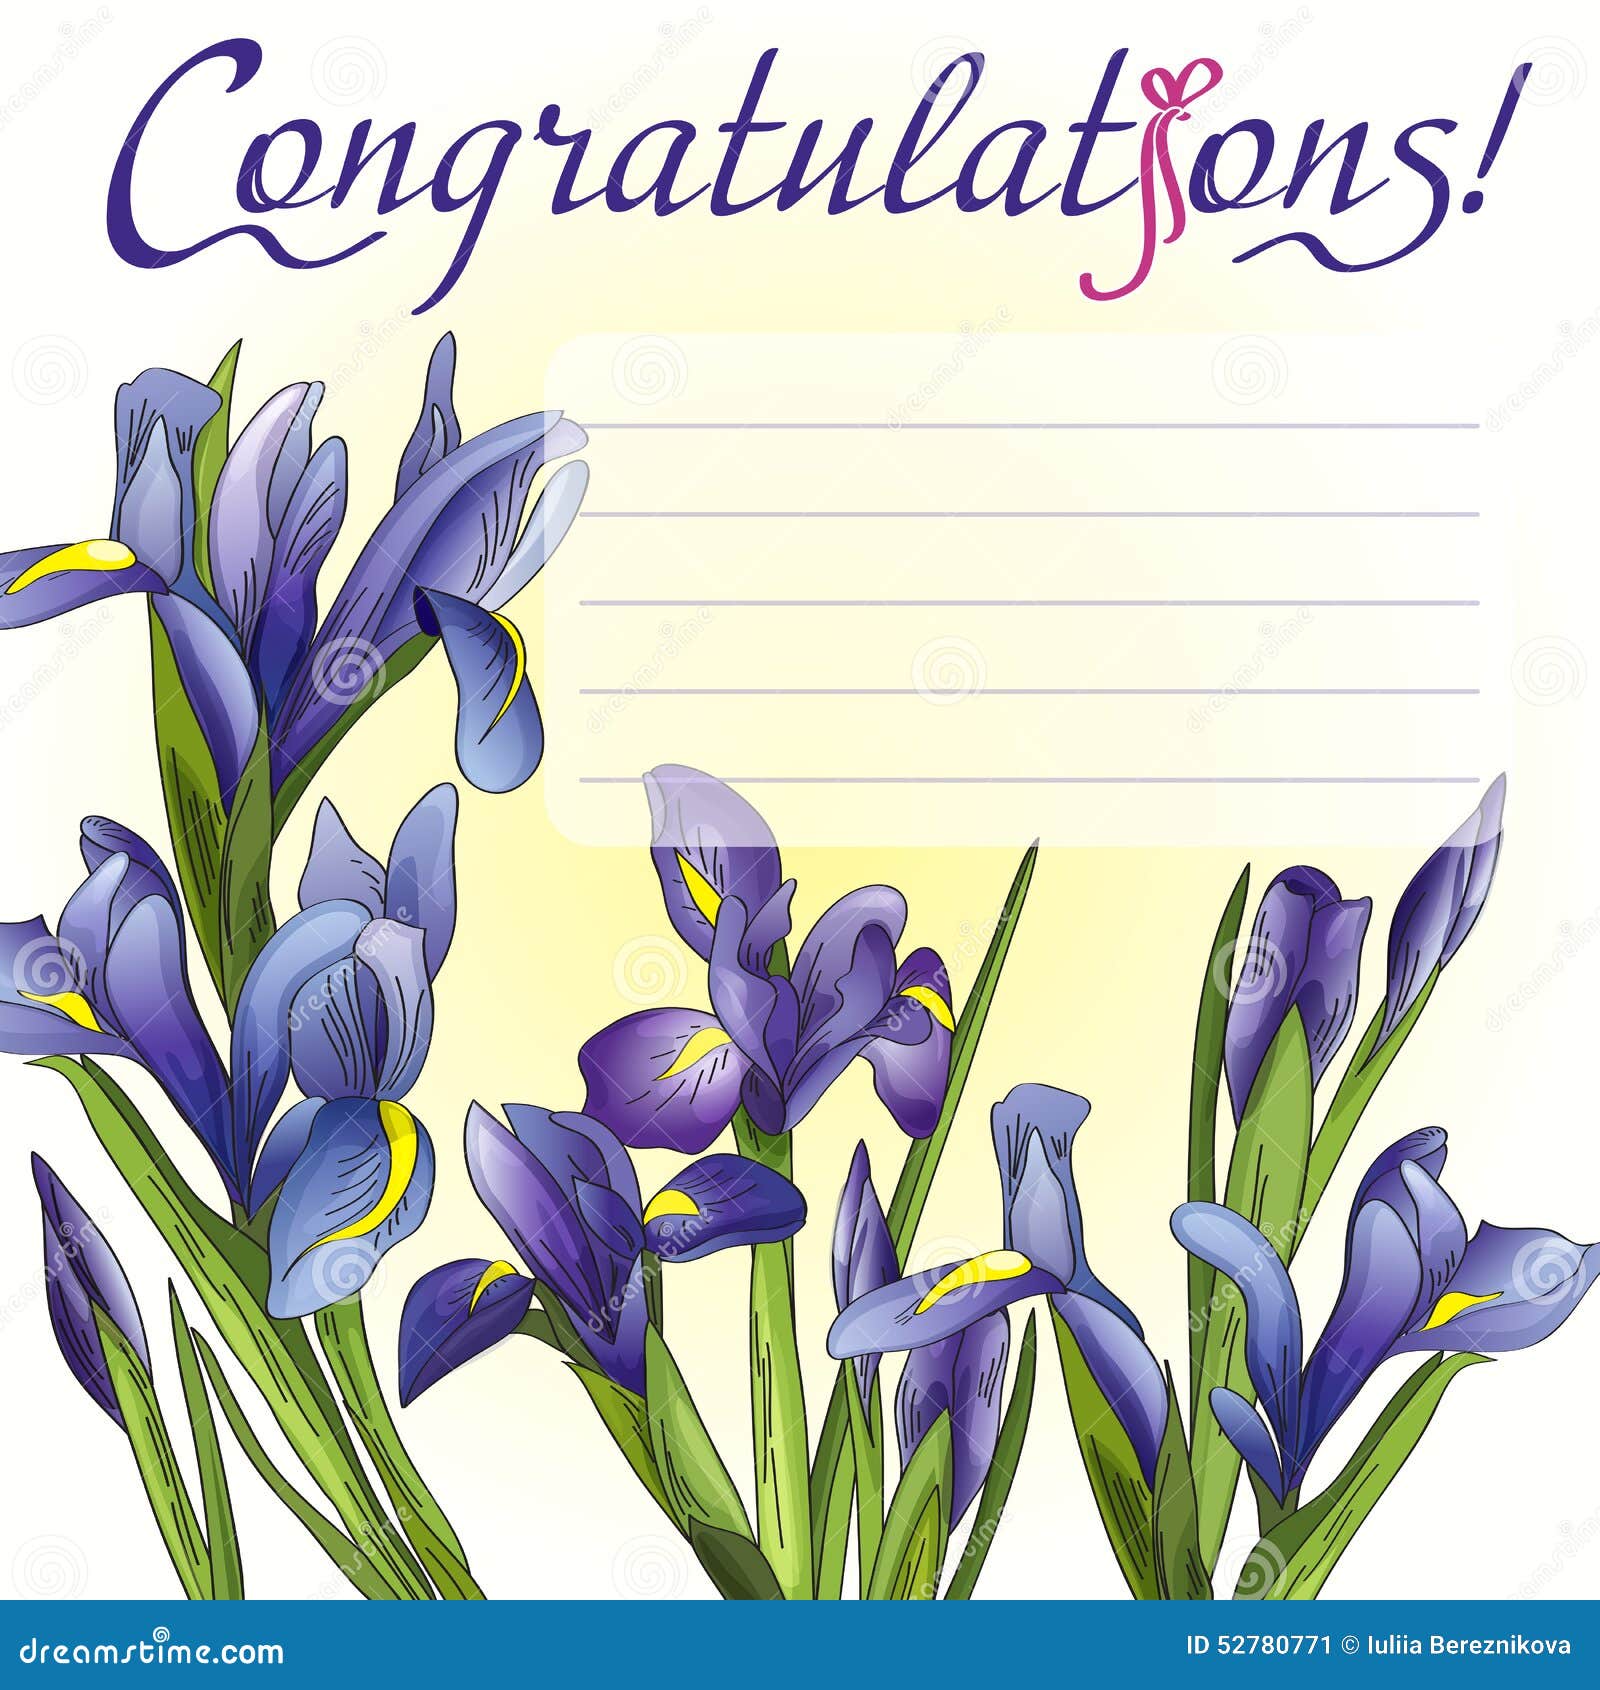 Congratulation Card Blue Irises Stock Vector - Illustration of ...